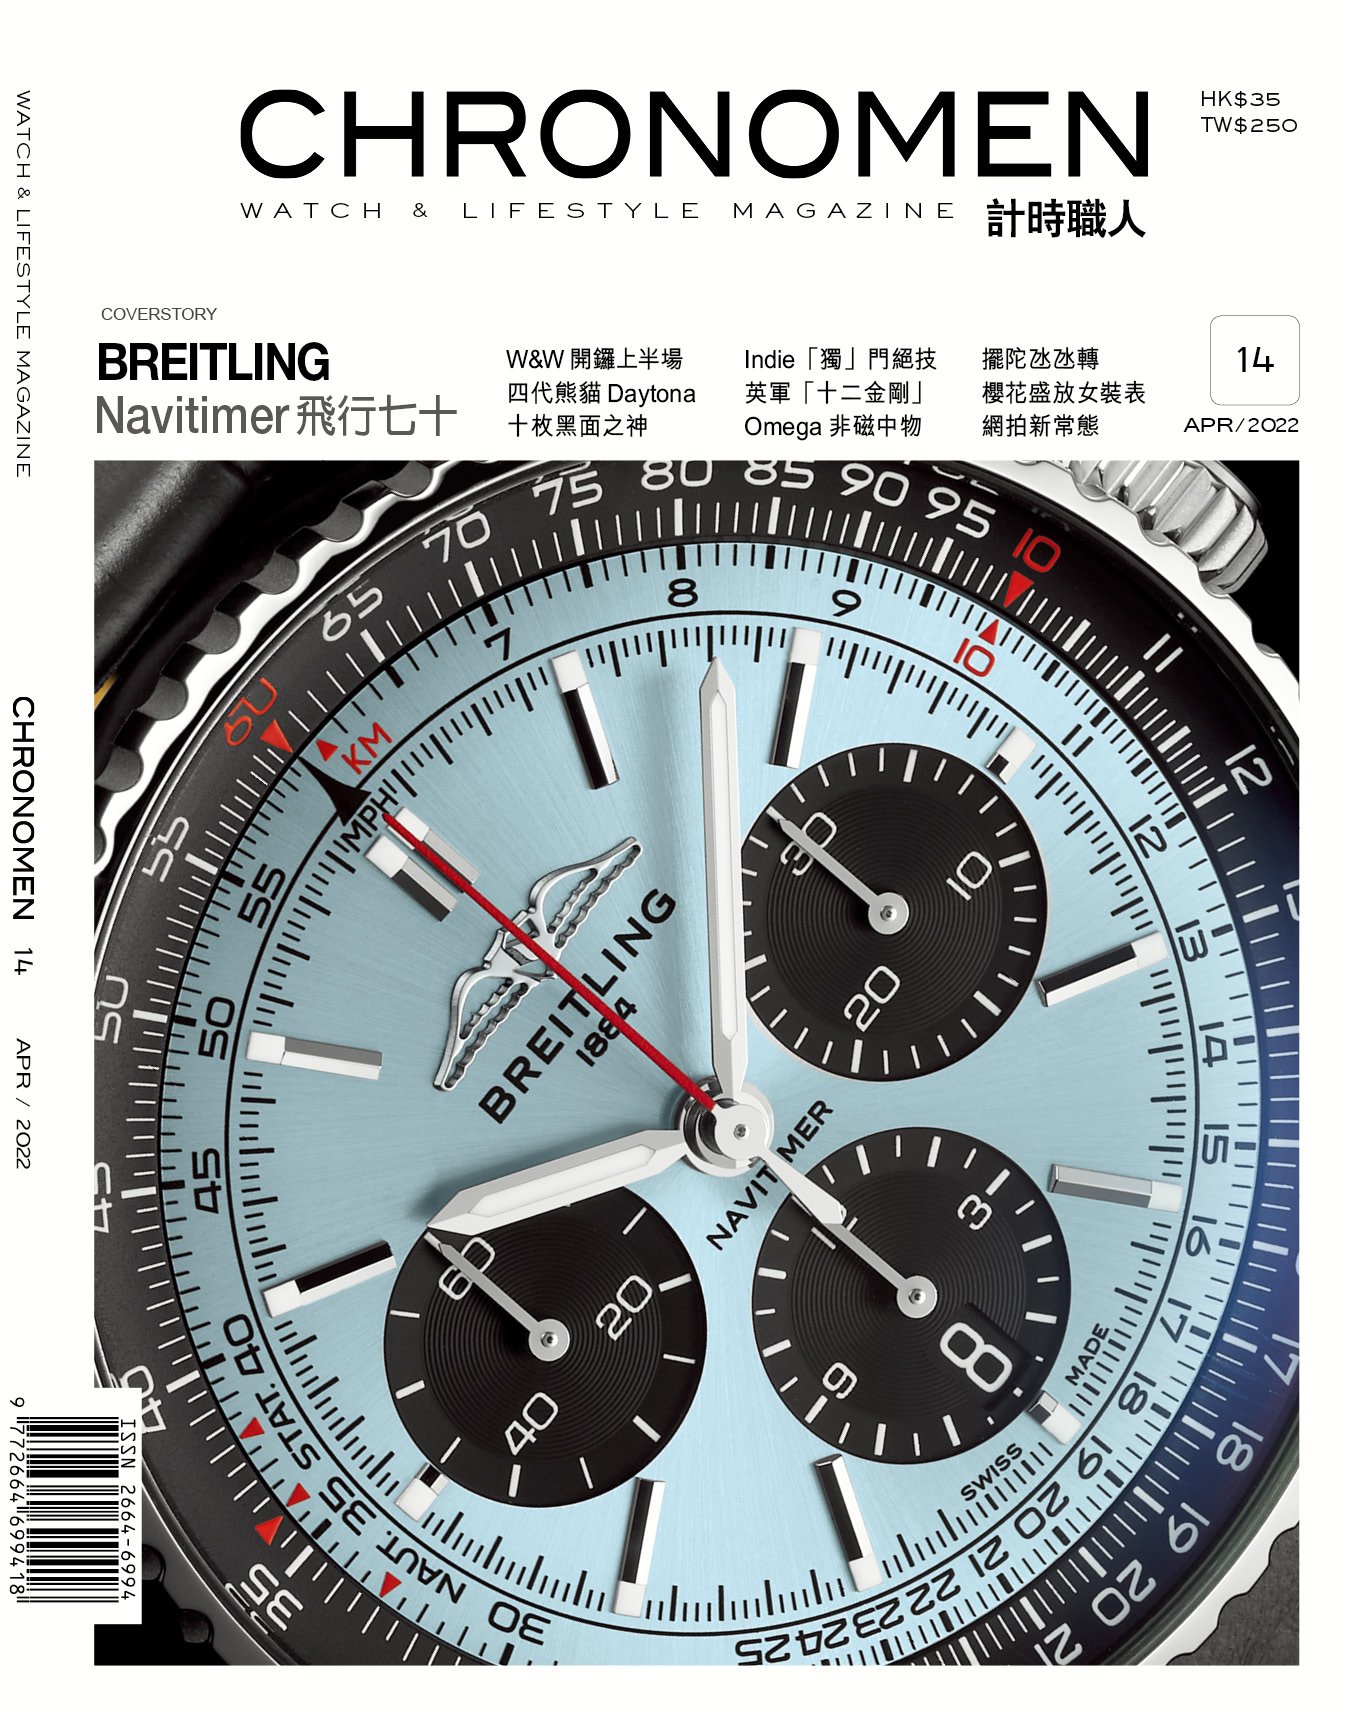 Chronomen 14 APR2022 - Cover.jpeg